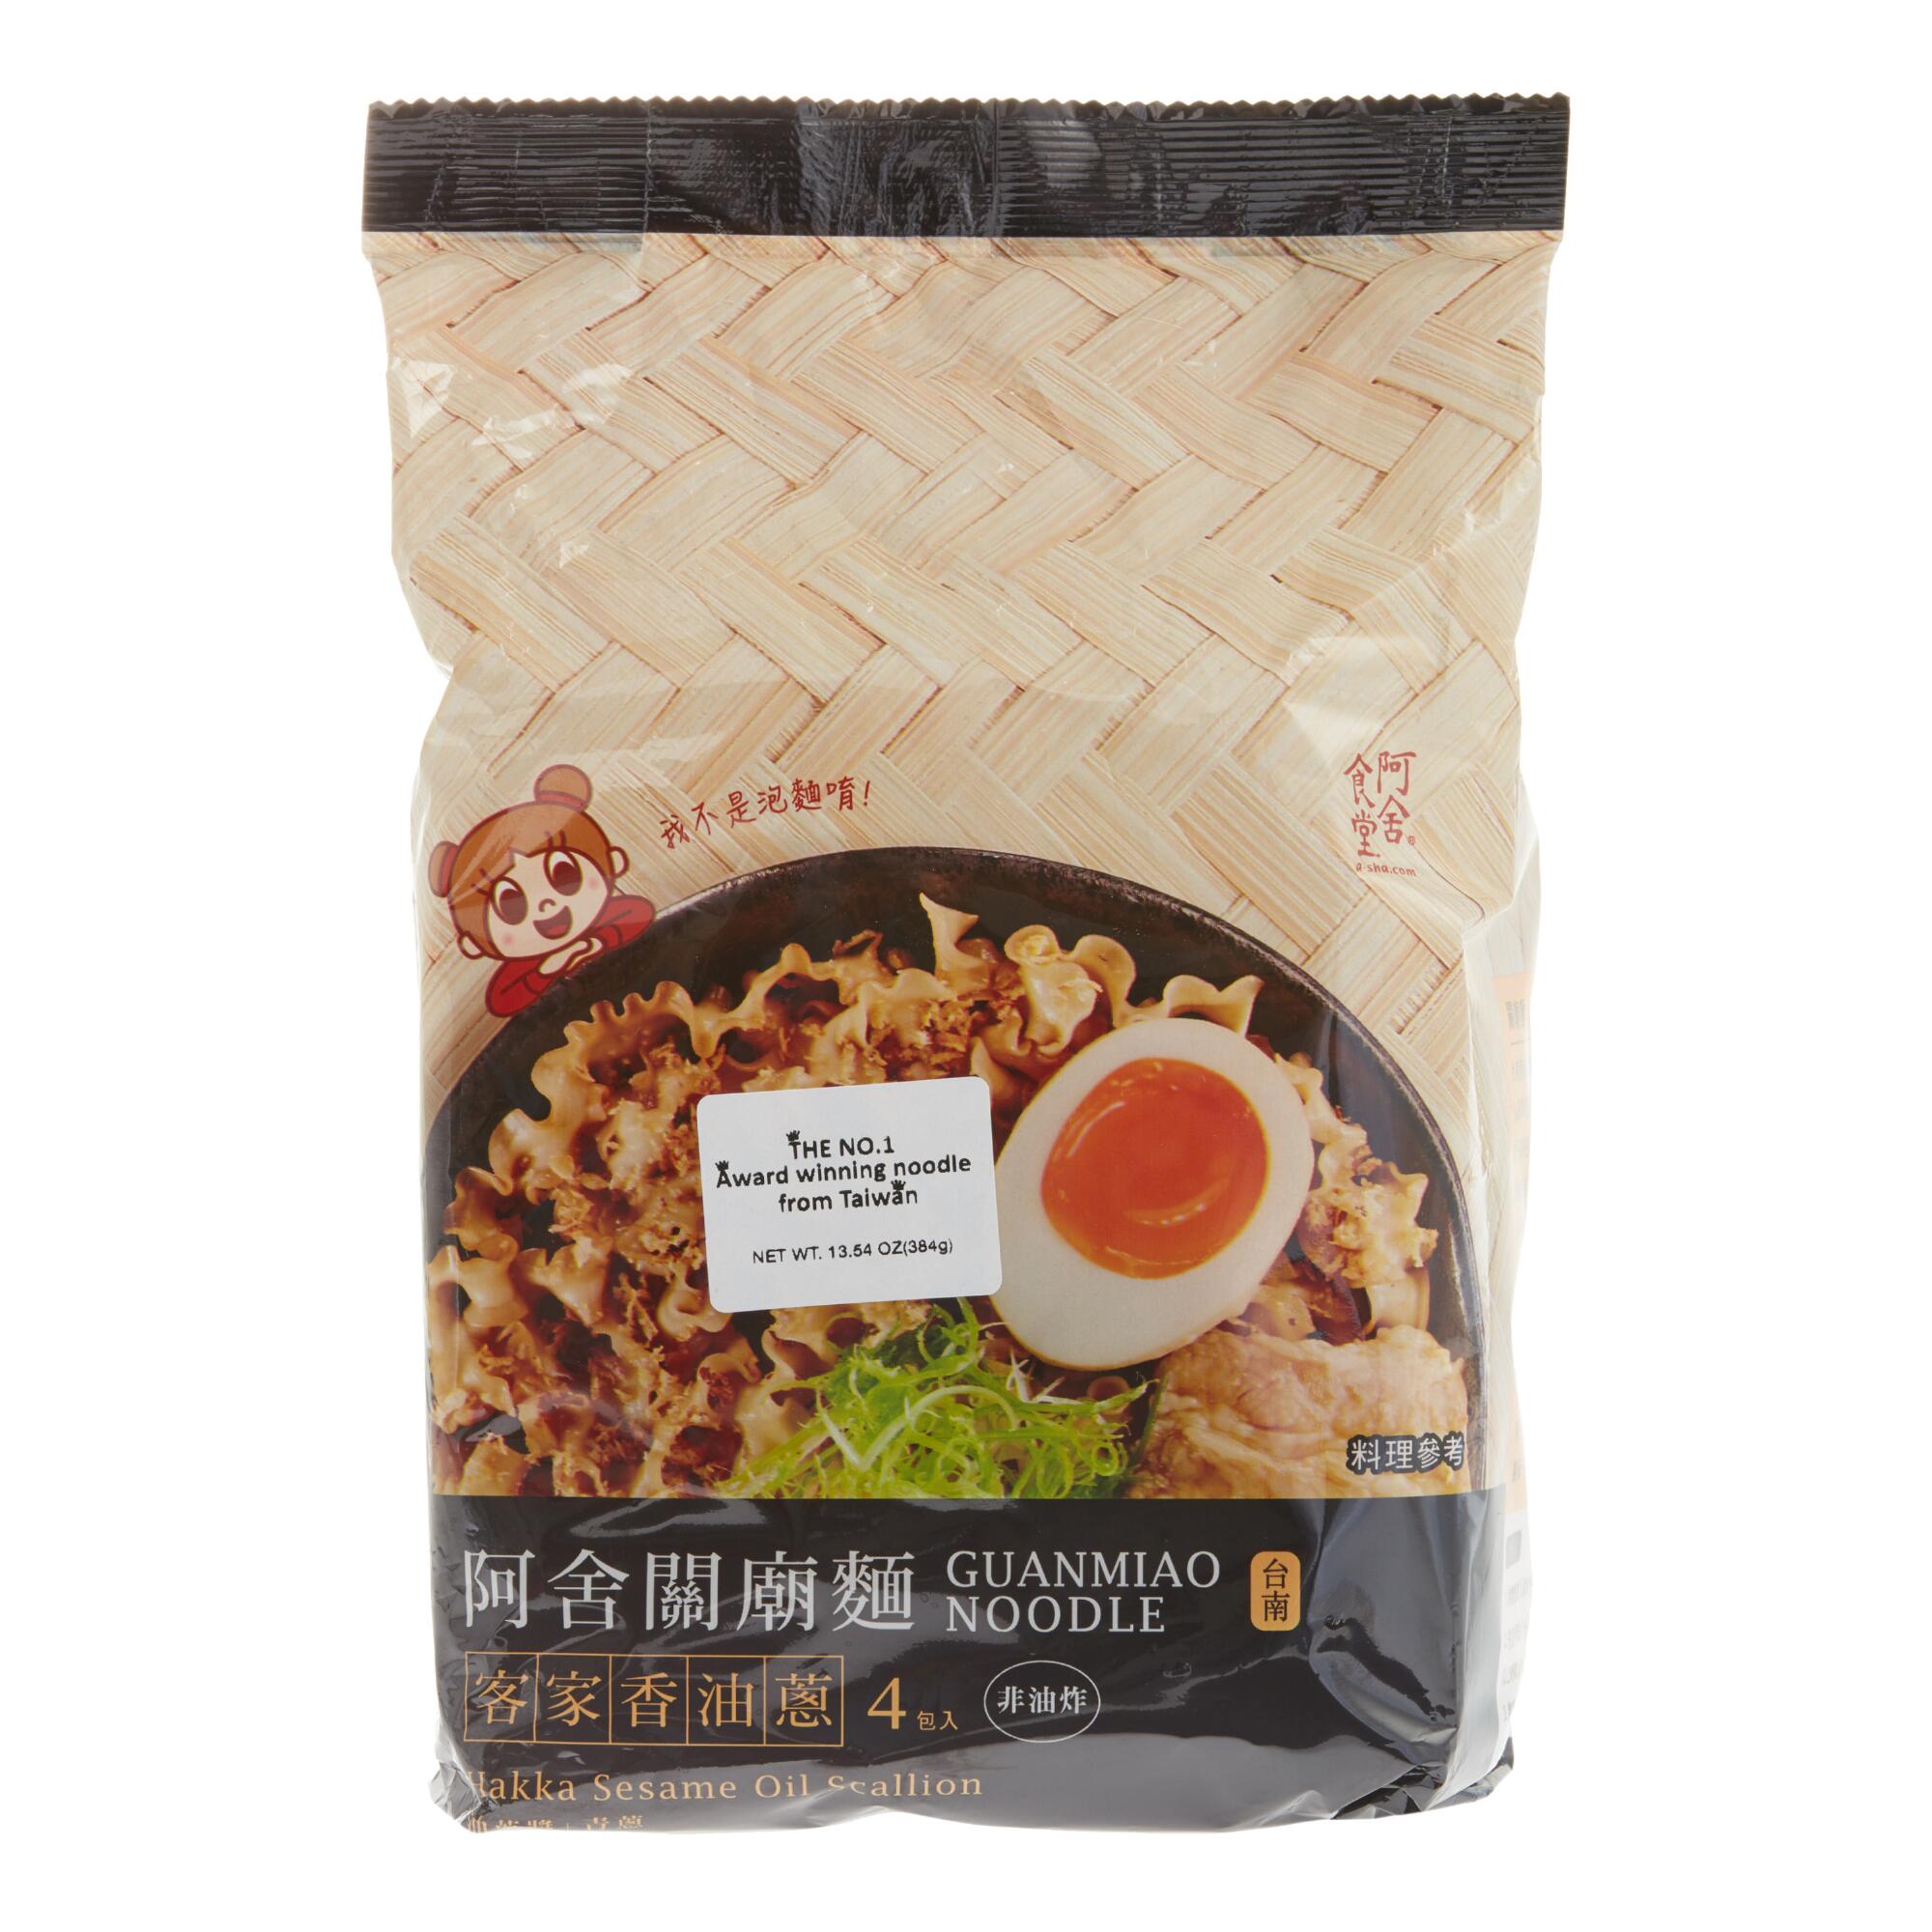 Asha Hakka Sesame Oil Scallion Guanmiao Noodles 4 Pack by World Market